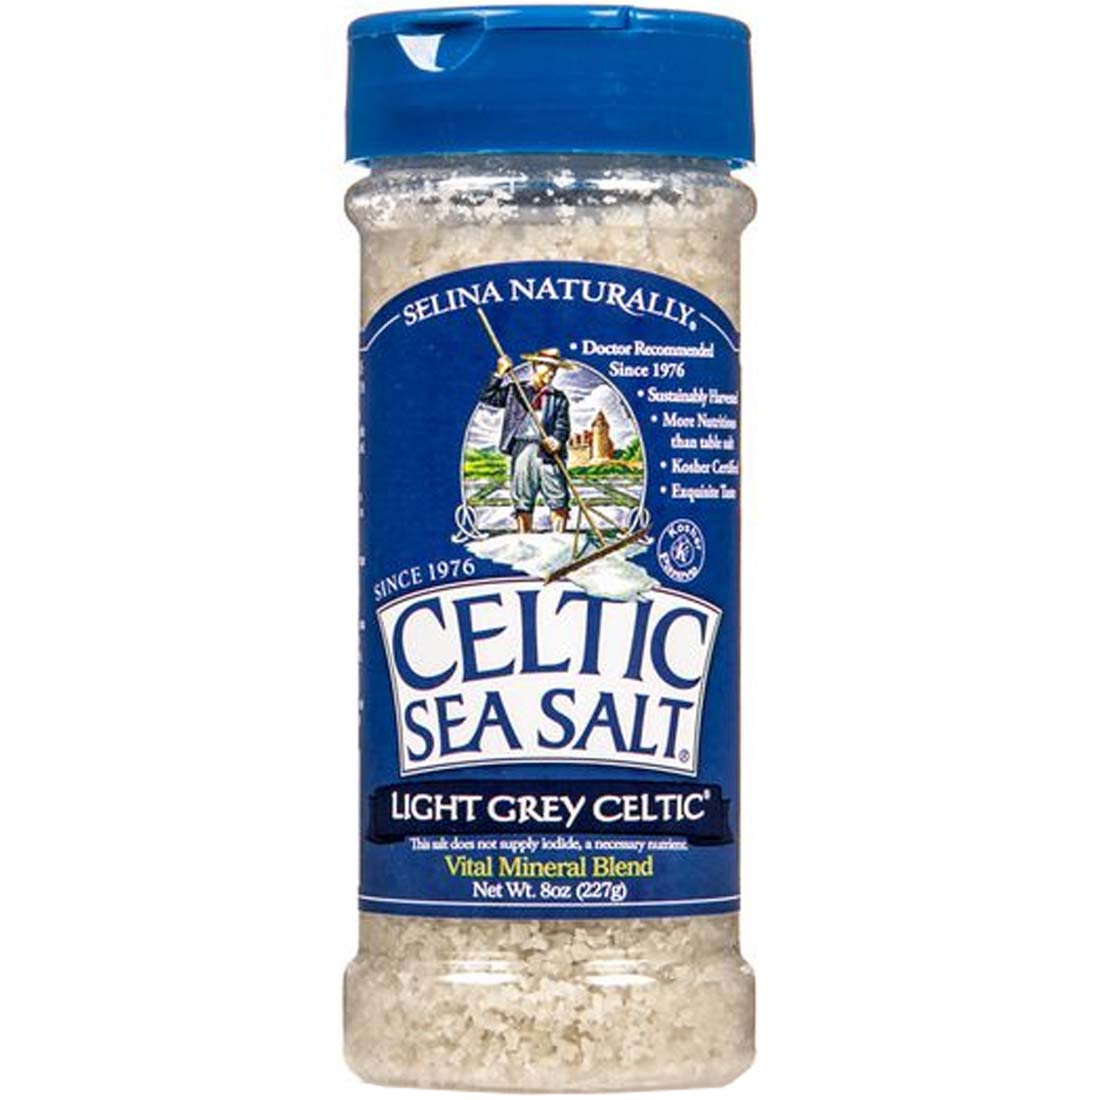 Celtic Sea Salt Light Grey